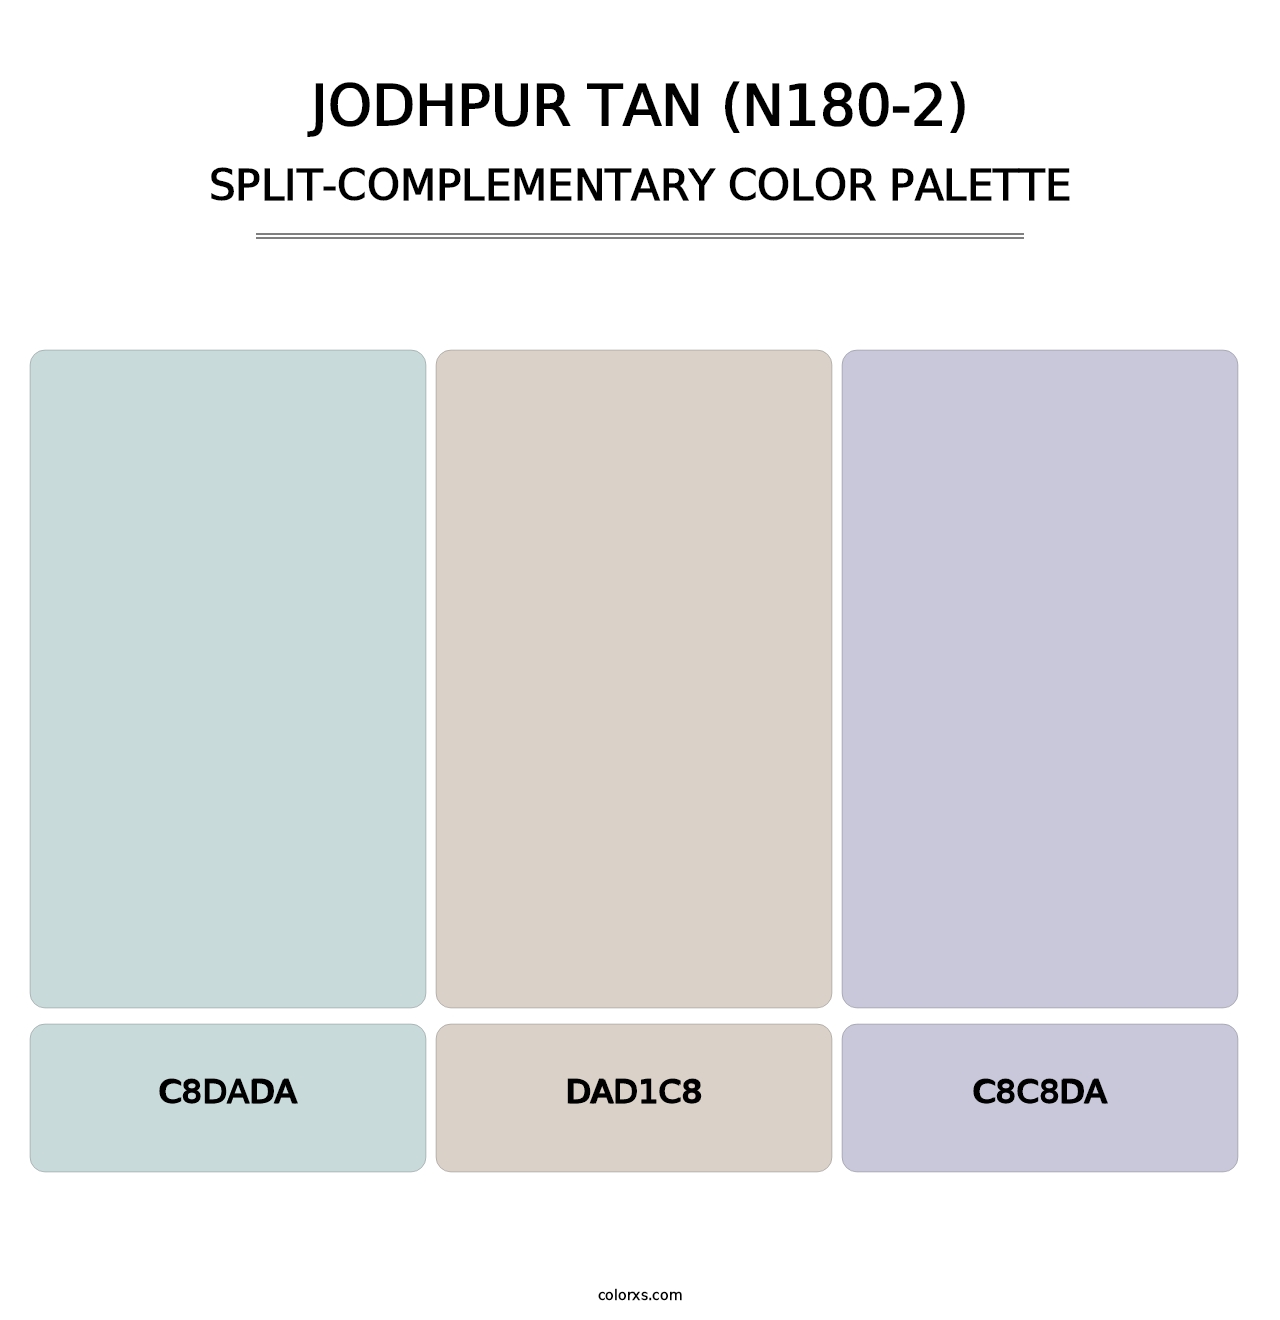 Jodhpur Tan (N180-2) - Split-Complementary Color Palette